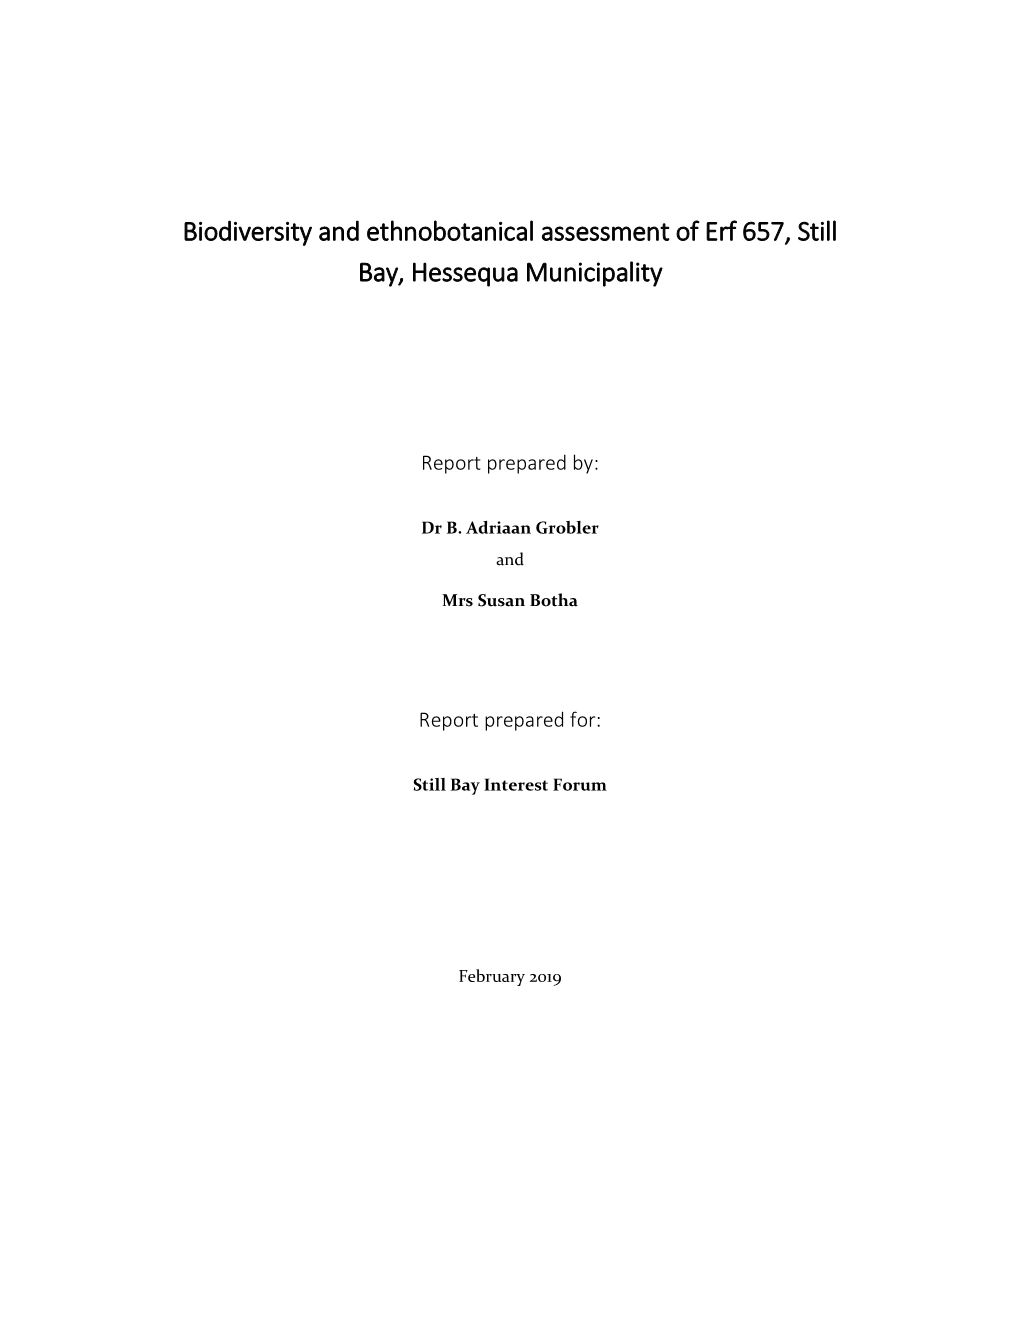 Biodiversity and Ethnobotanical Assessment of Erf 657, Still Bay, Hessequa Municipality